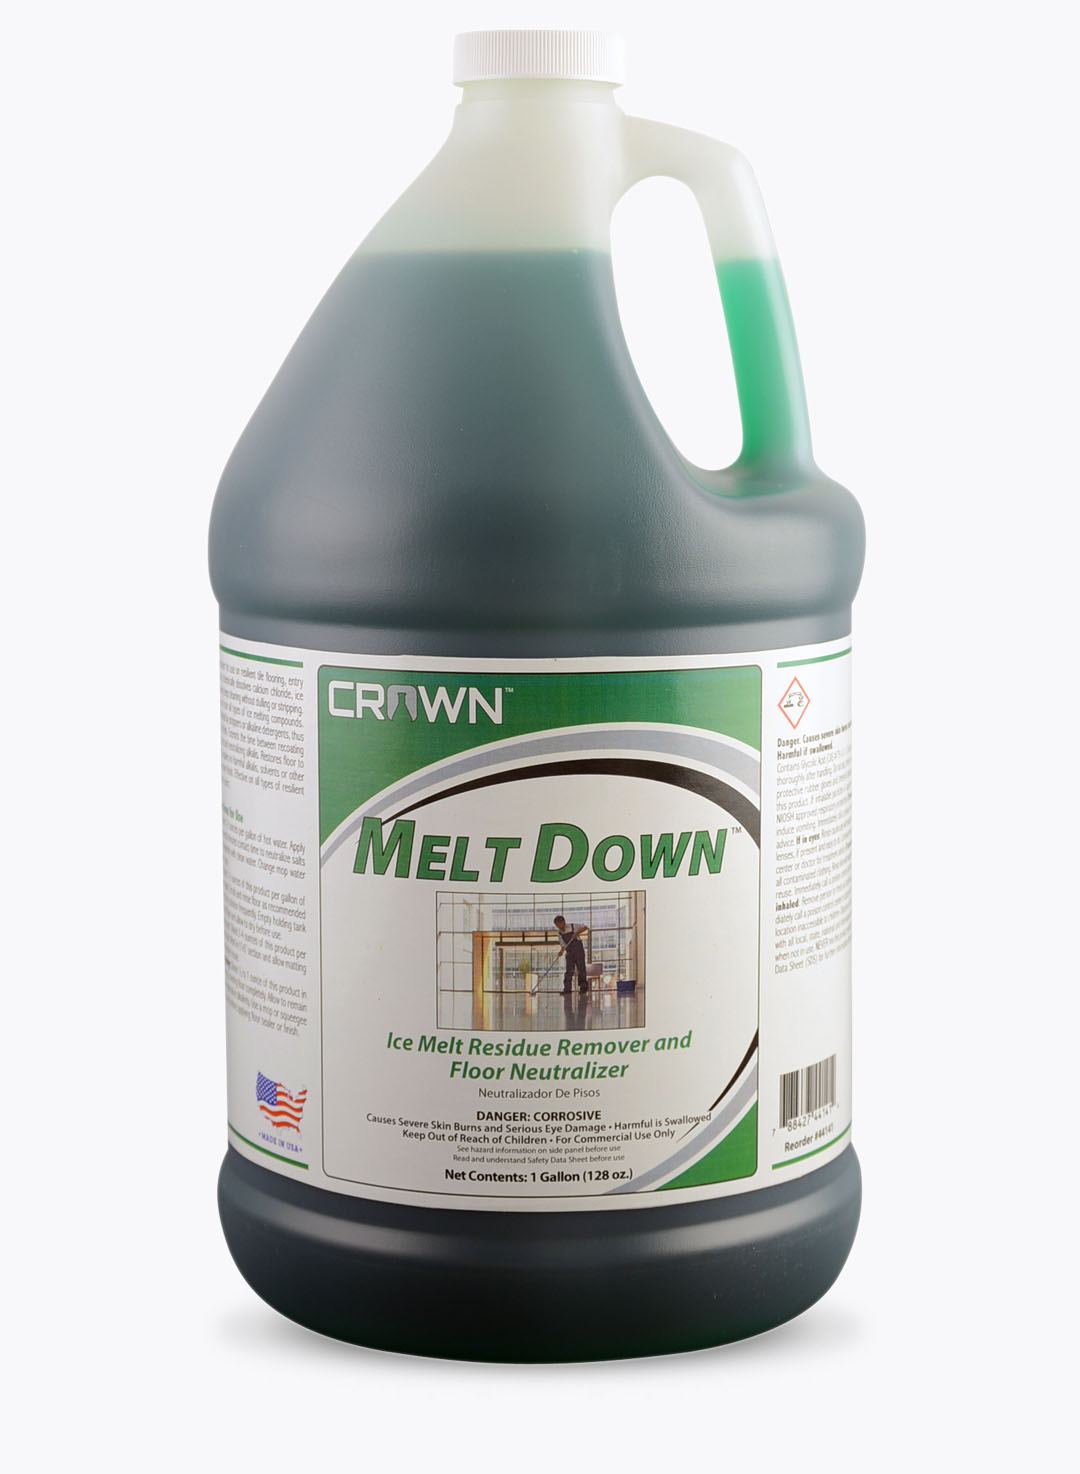 Melt Down